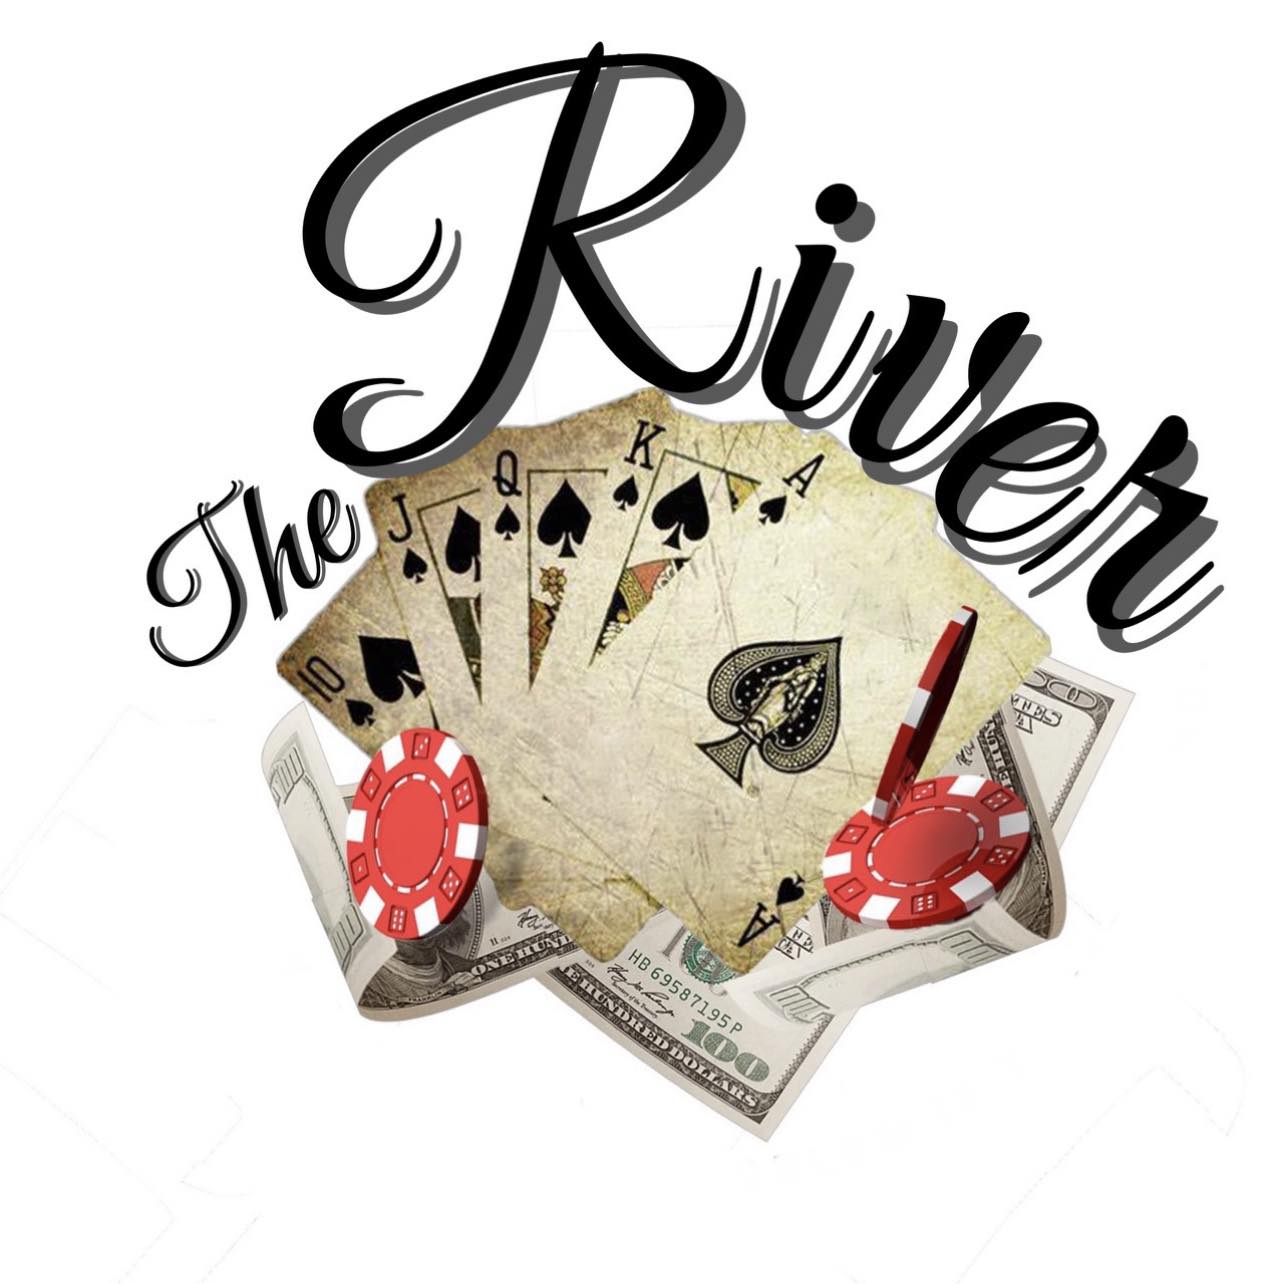 The River Poker Club